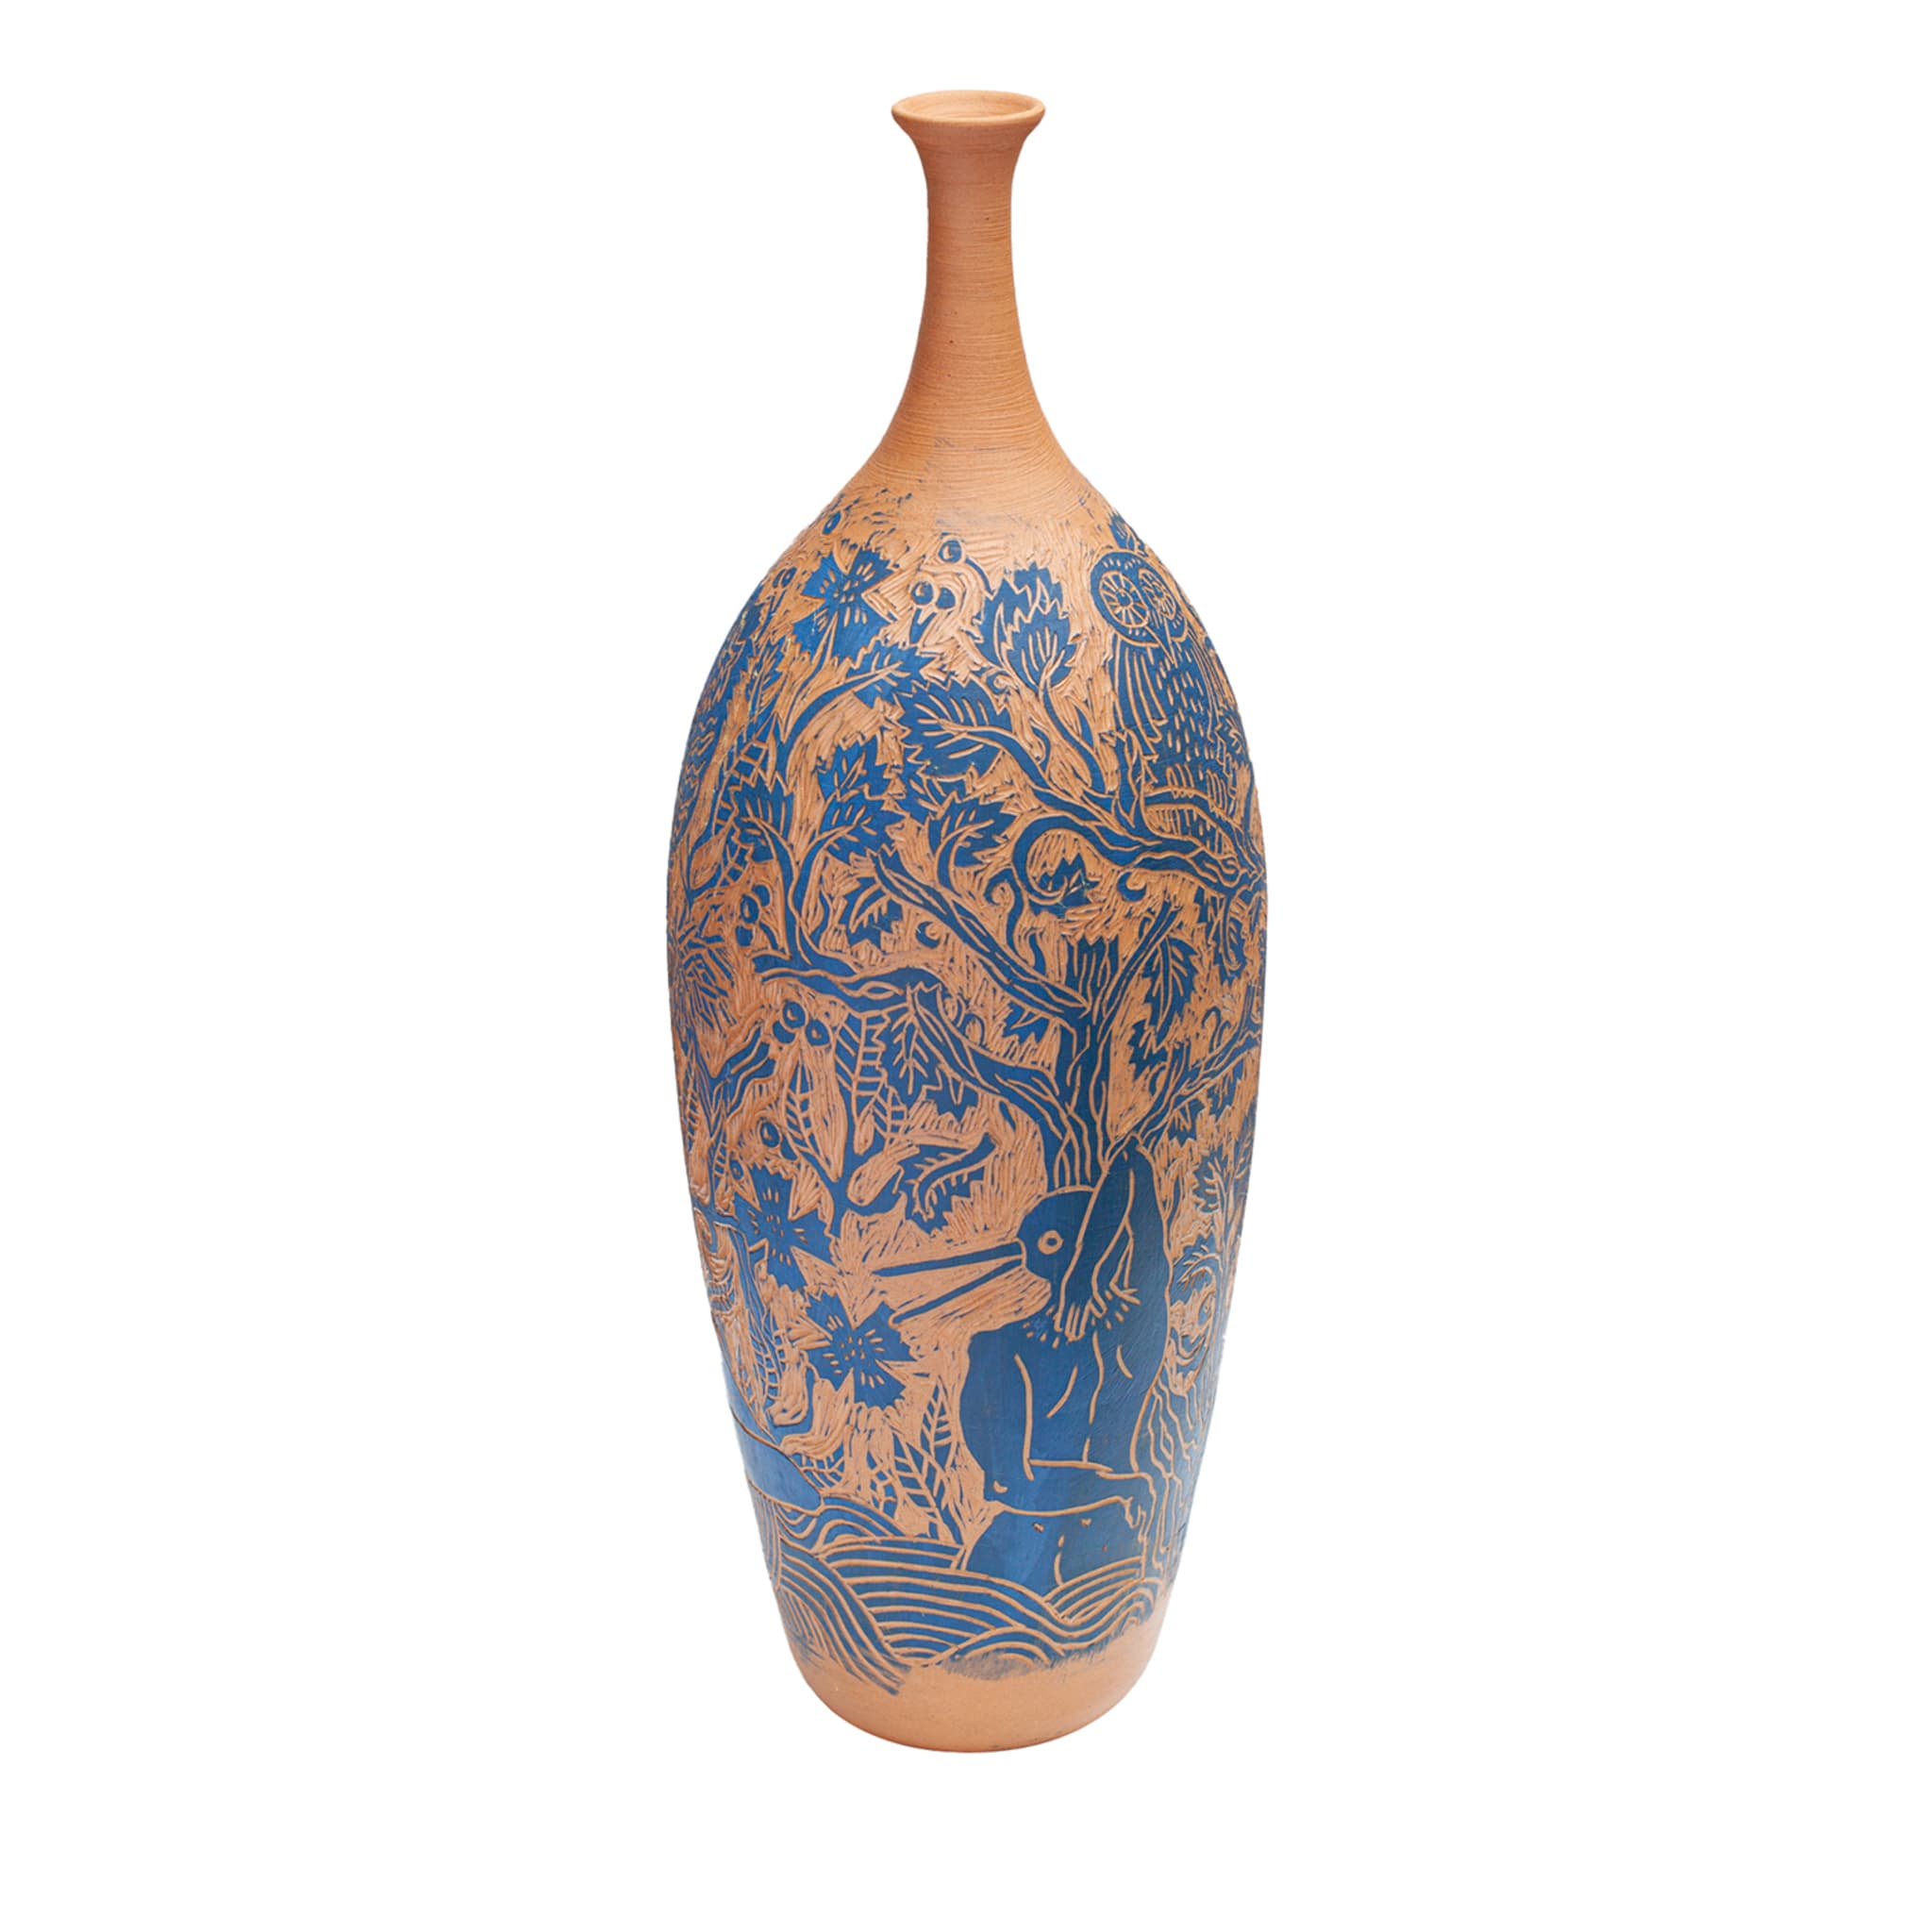 Aironi Heron Vase by Clara Holt and Chiara Zoppei - Main view